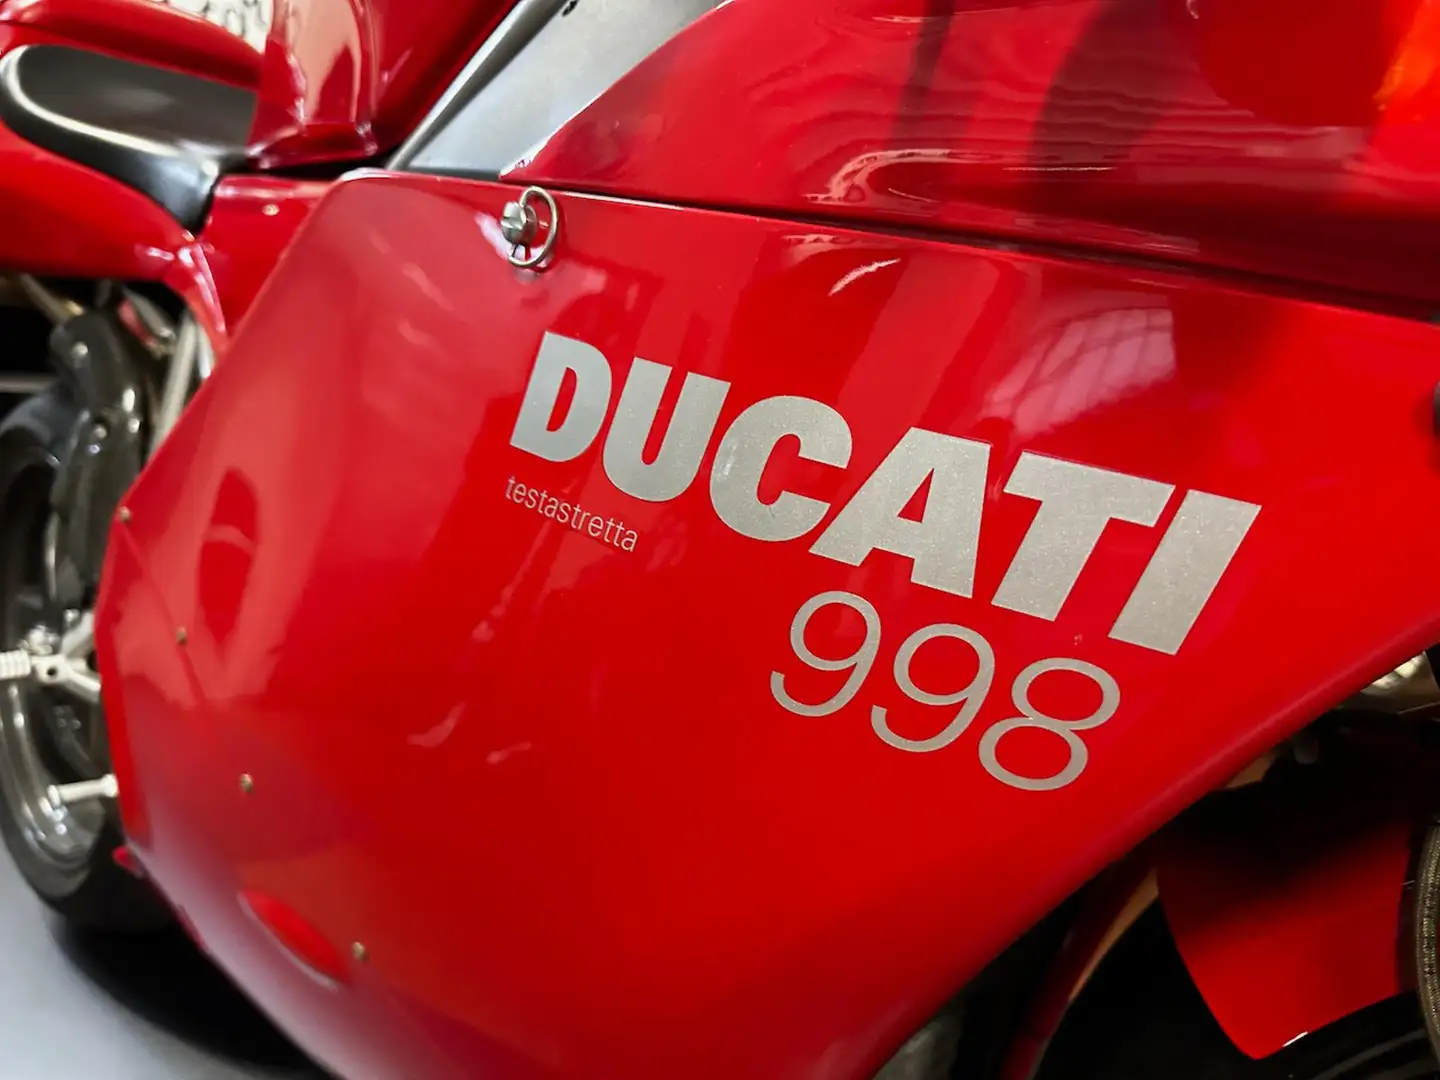 Ducati 998 ORIGINALE Rosso - 2